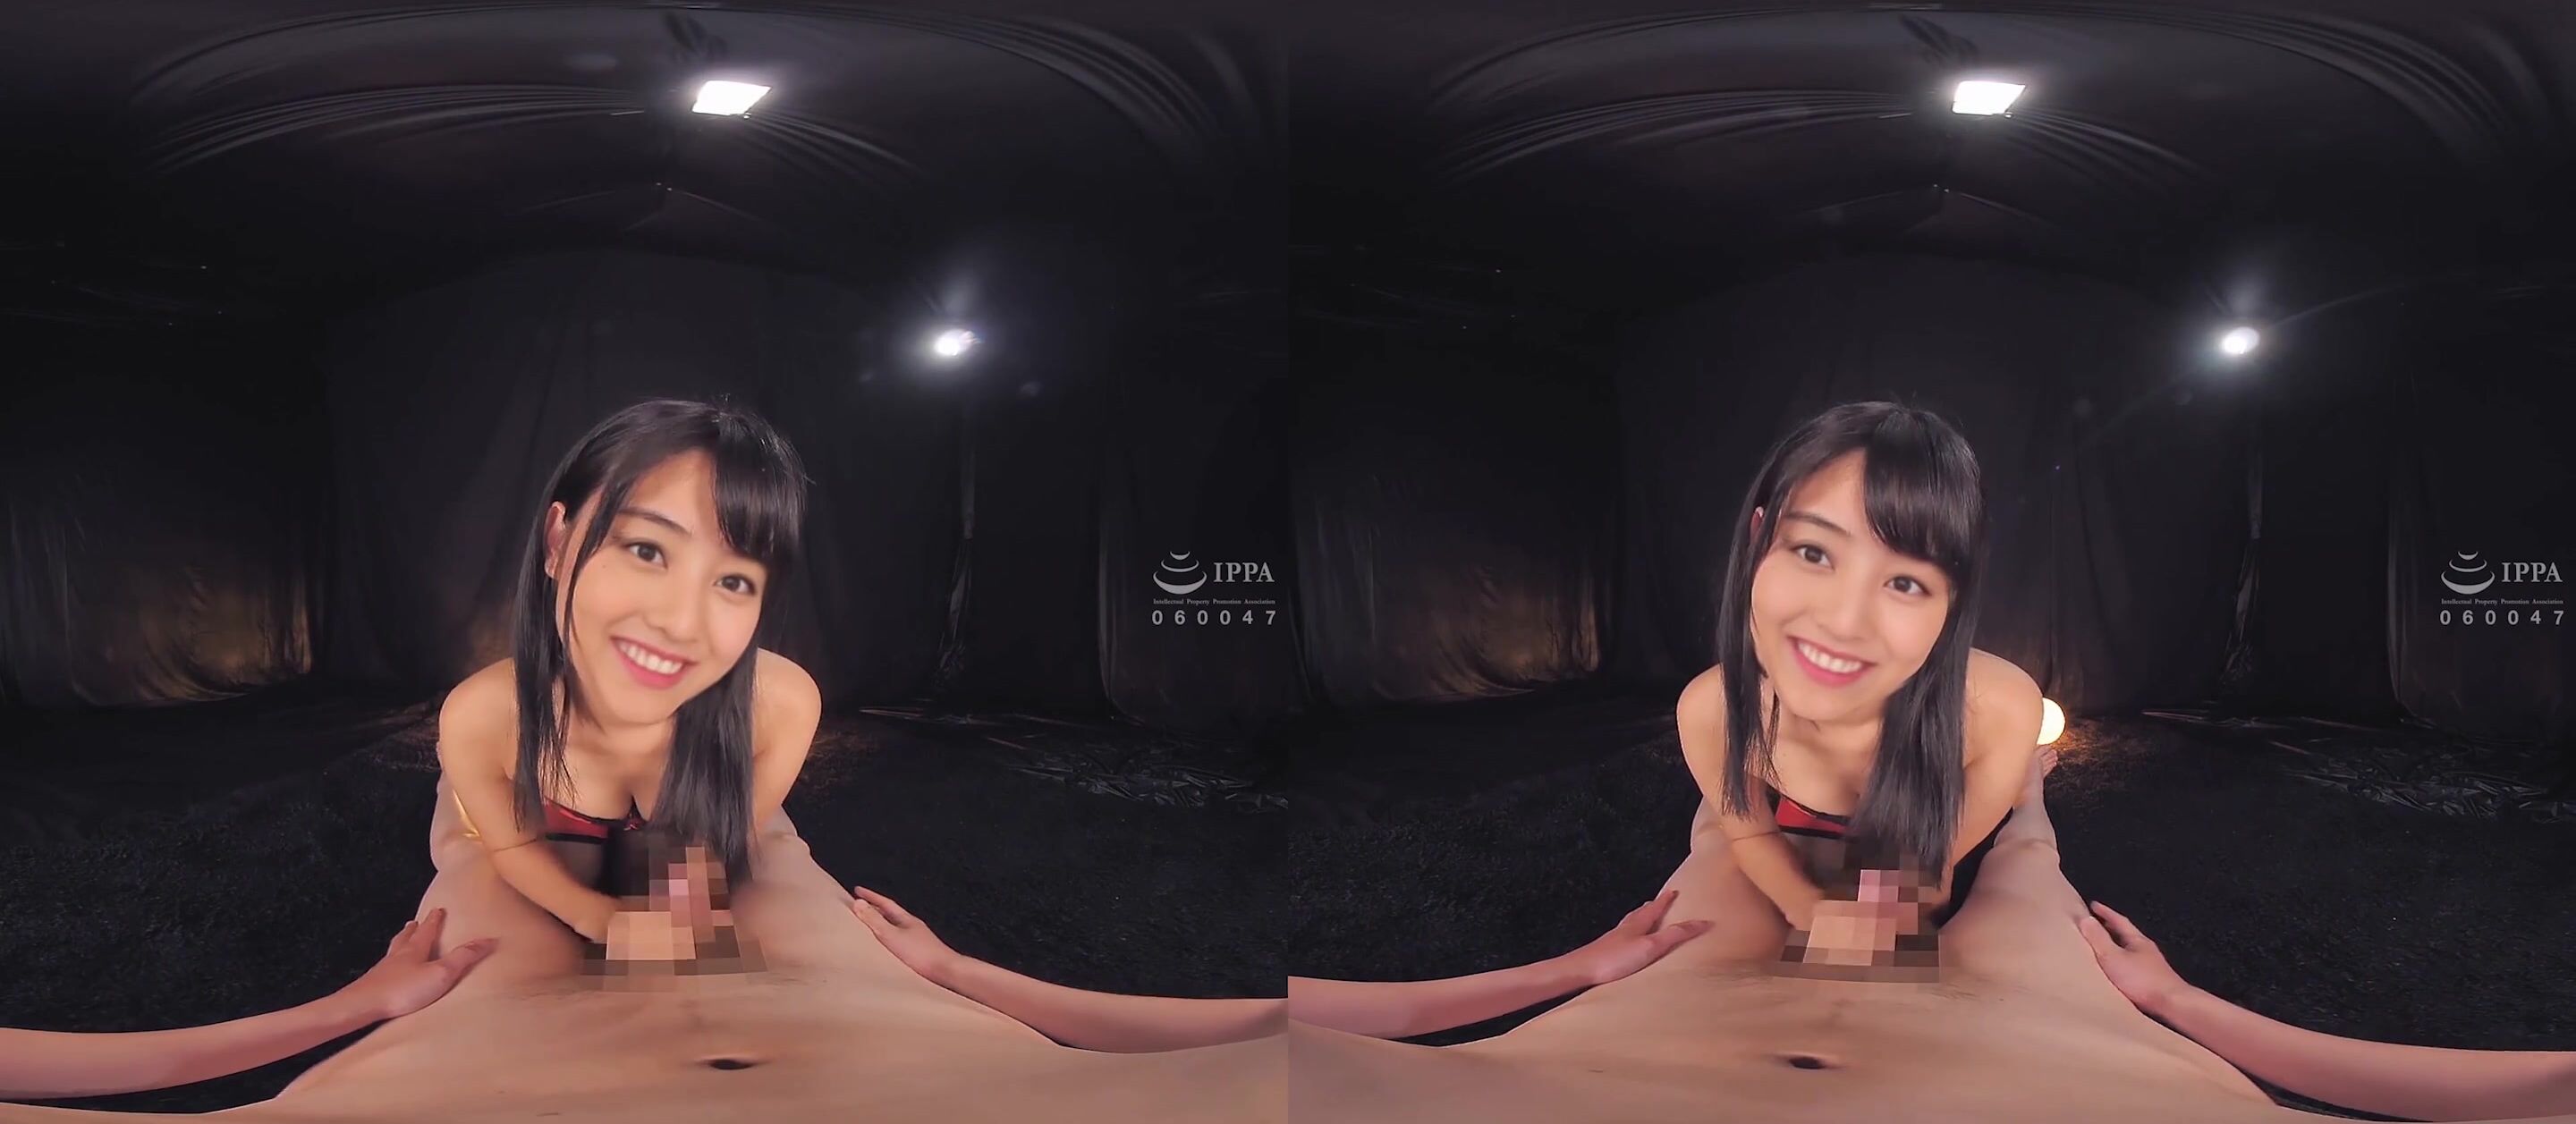 Twice Jihyo Virtual Reality Handjob Maiden